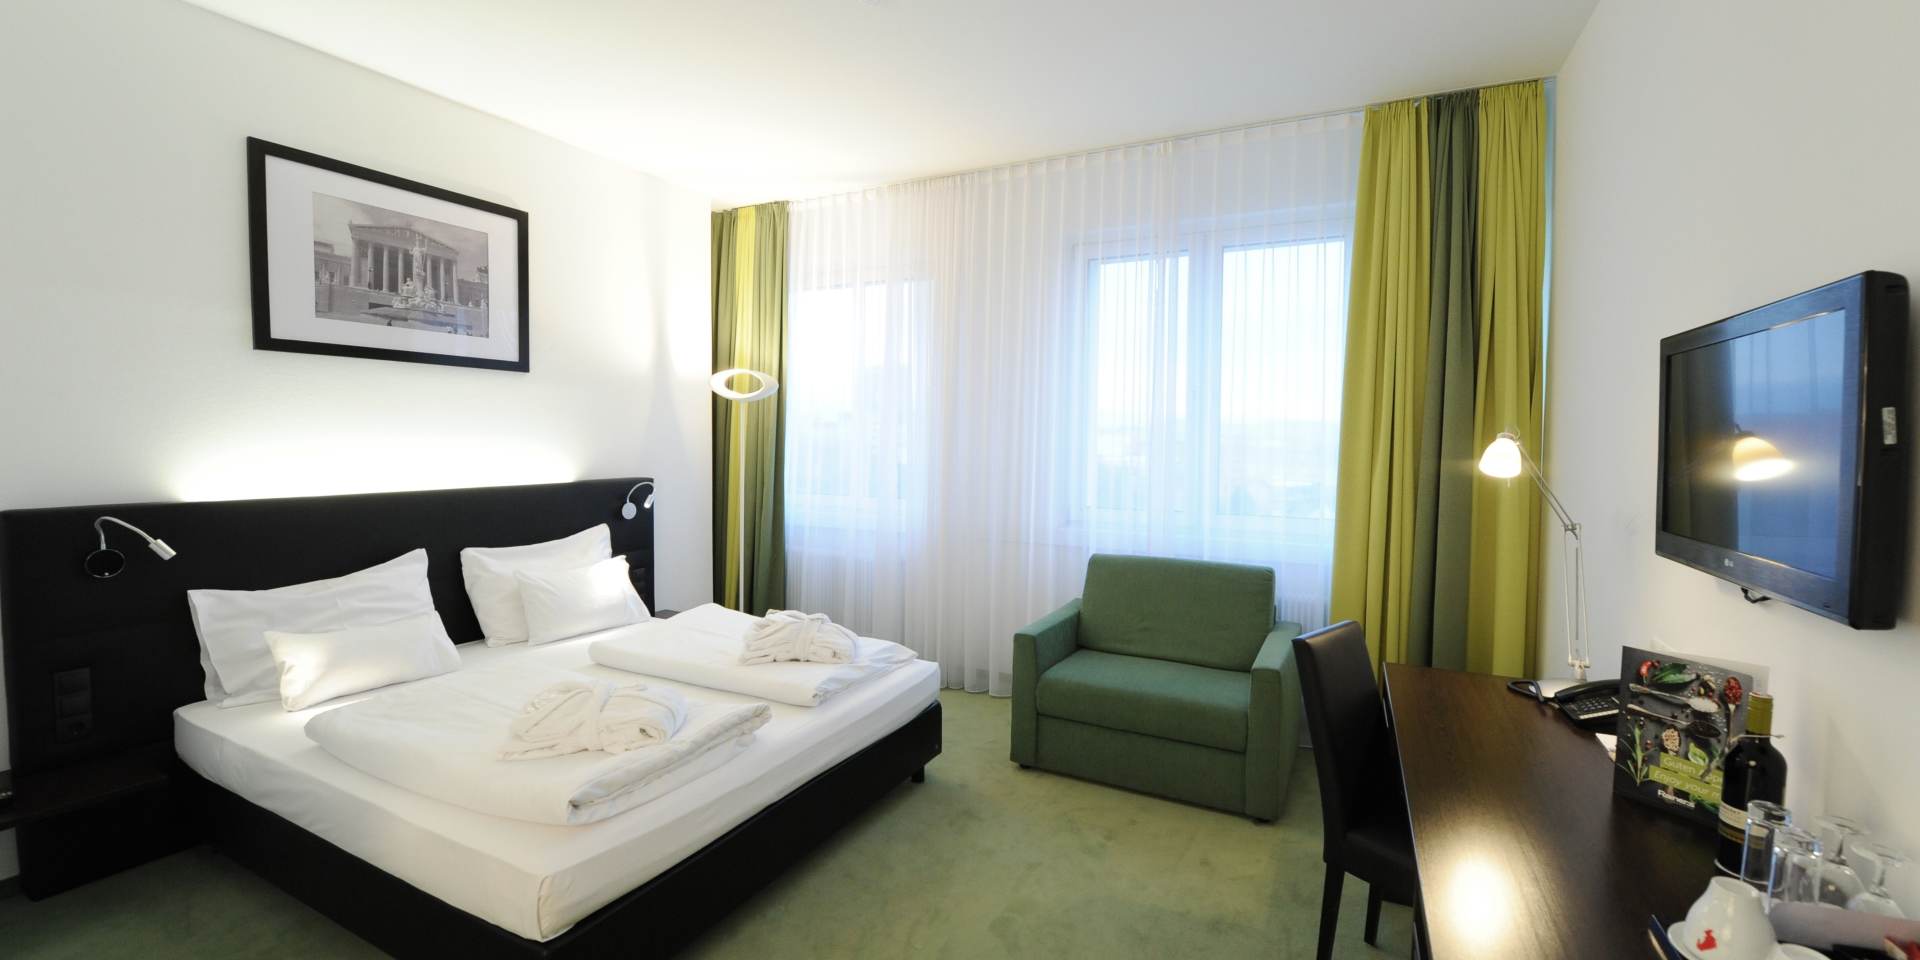 Rainers Hotel Vienna - double room © Rainers Hotel Vienna